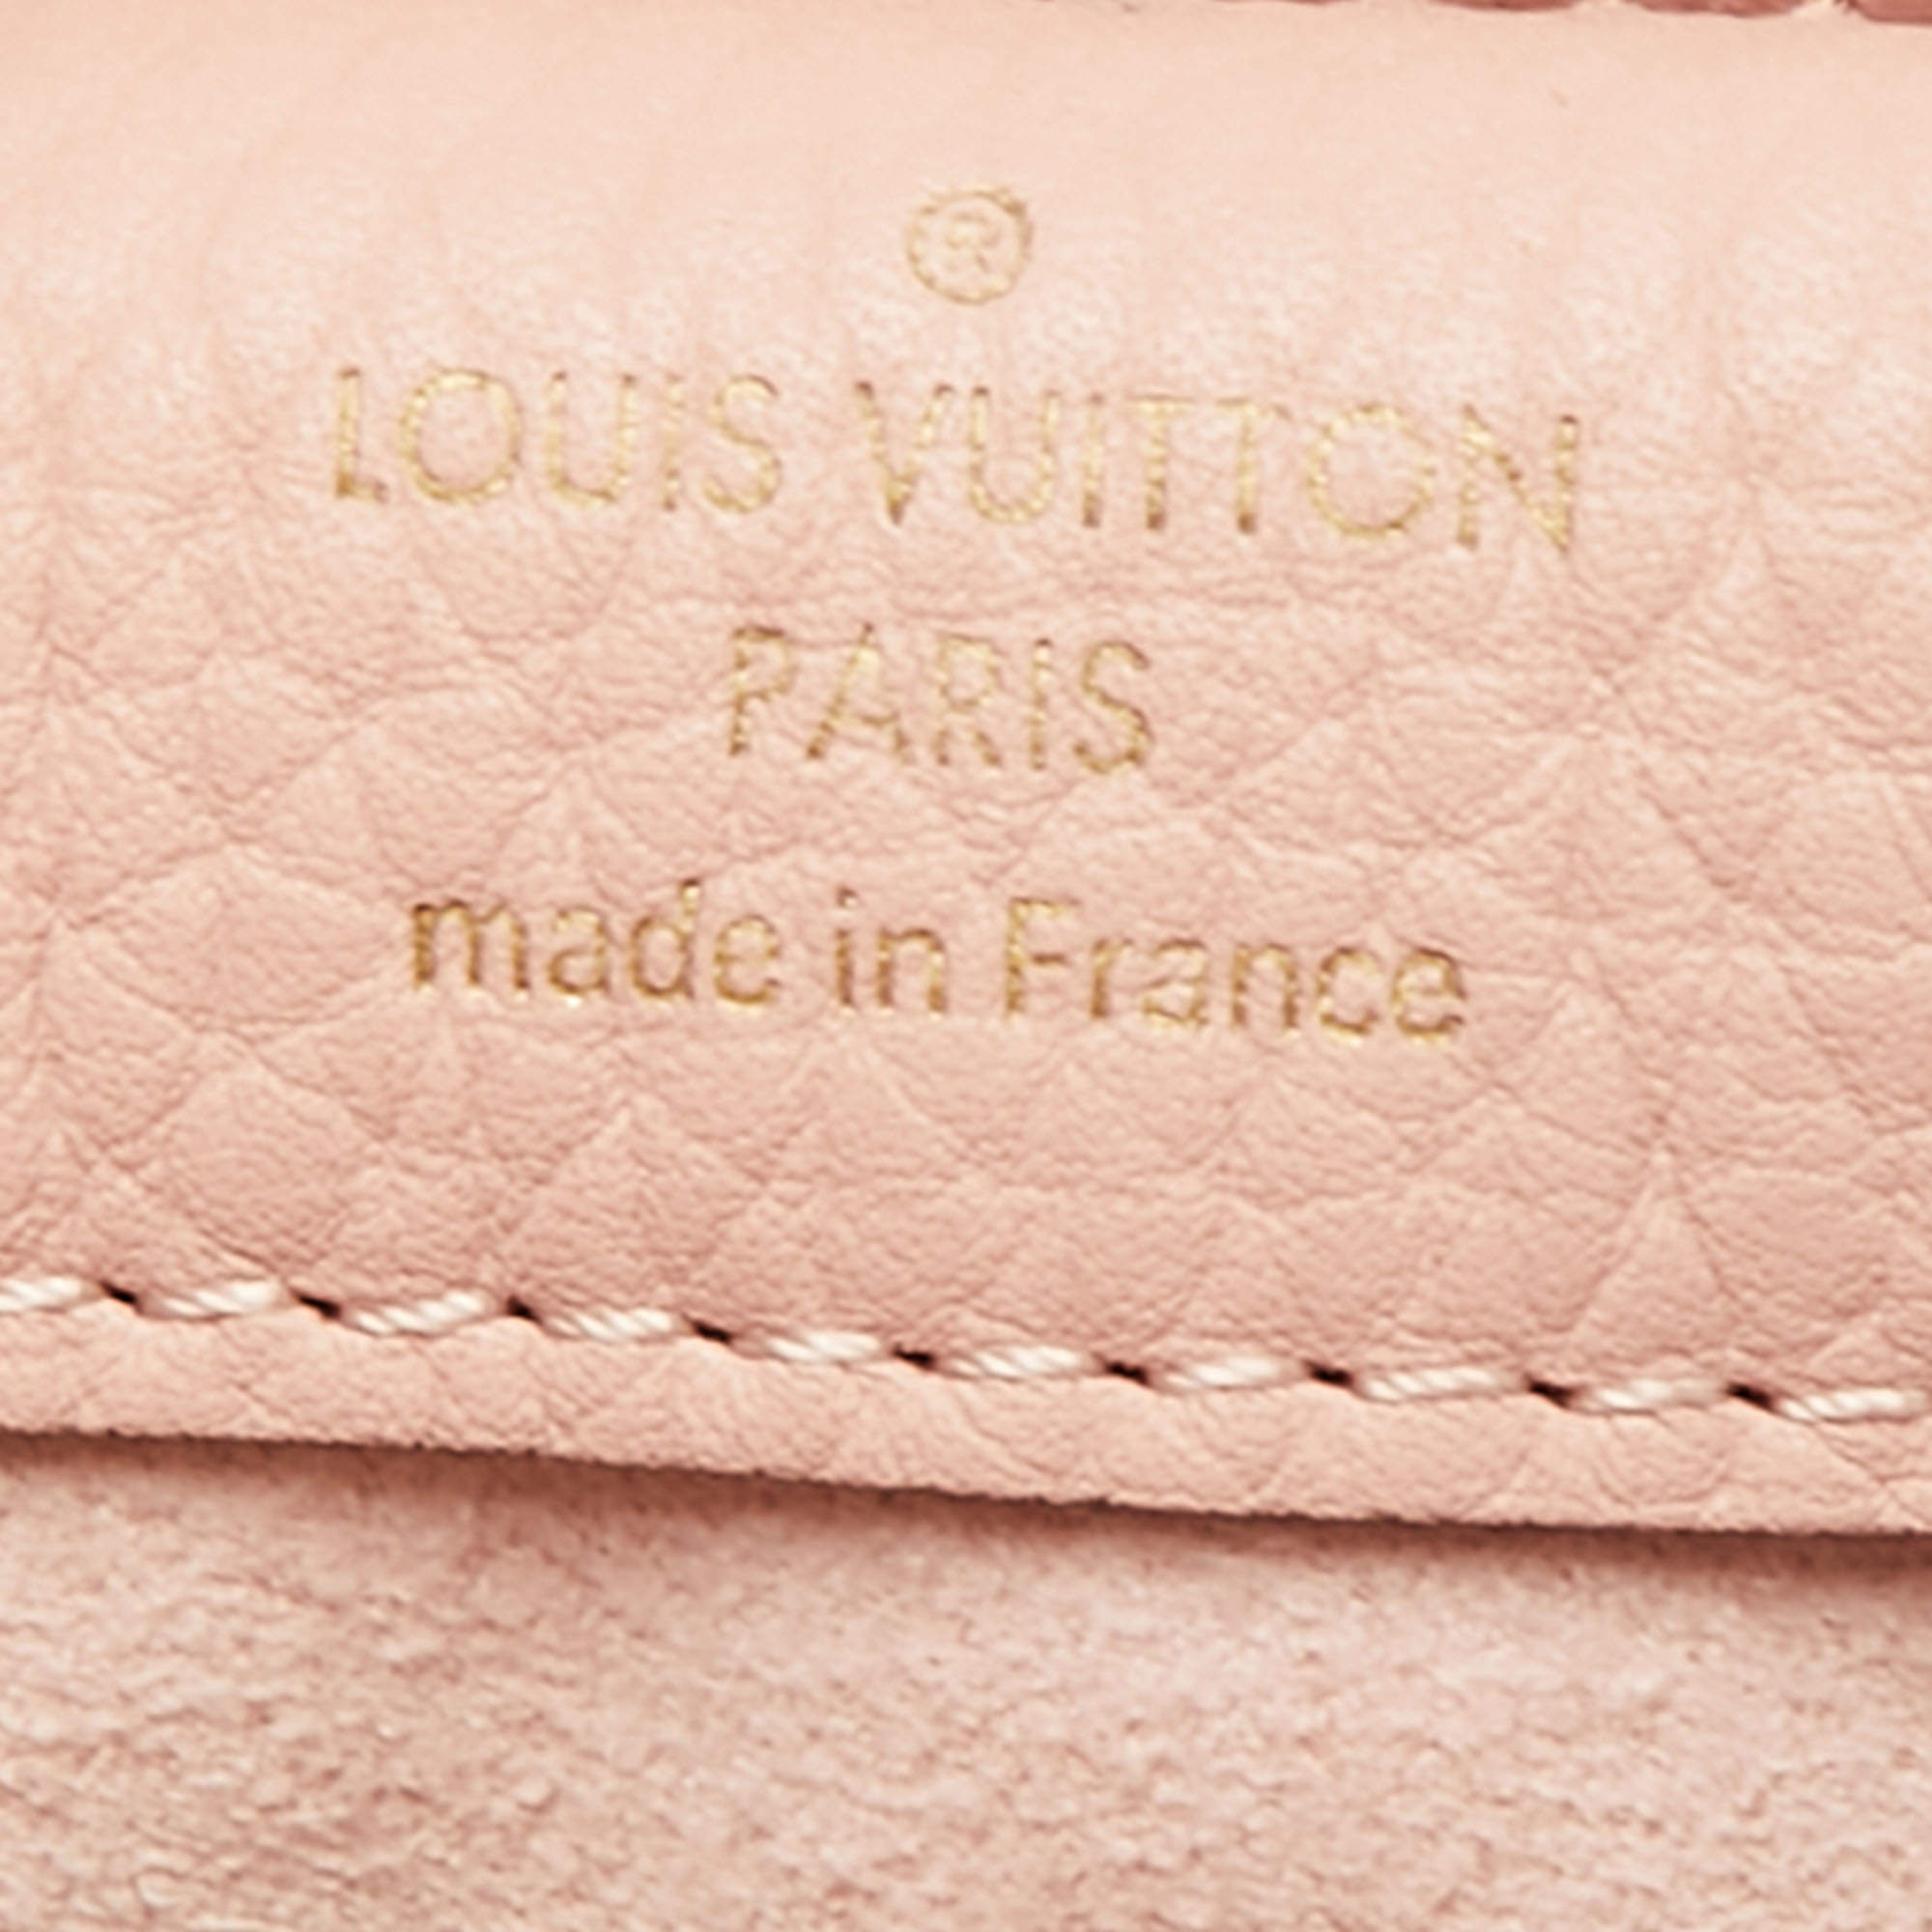 Louis Vuitton – Louis Vuitton Brittany Damier Ebene Magnolia